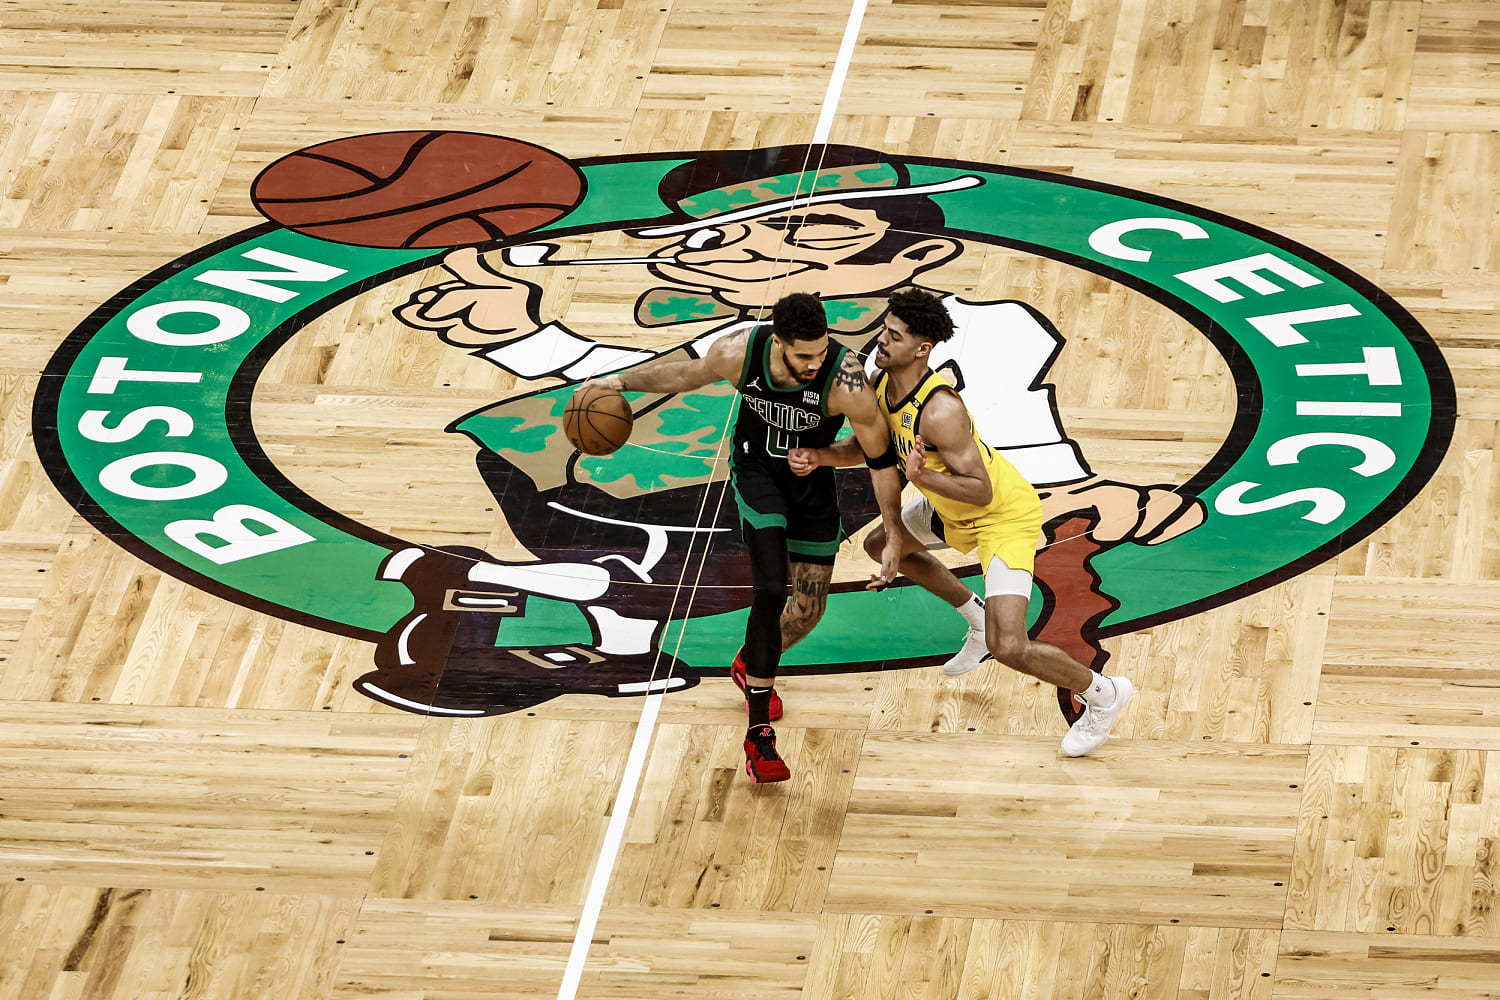 Boston Celtics' majority owner puts team up for sale after winning NBA title